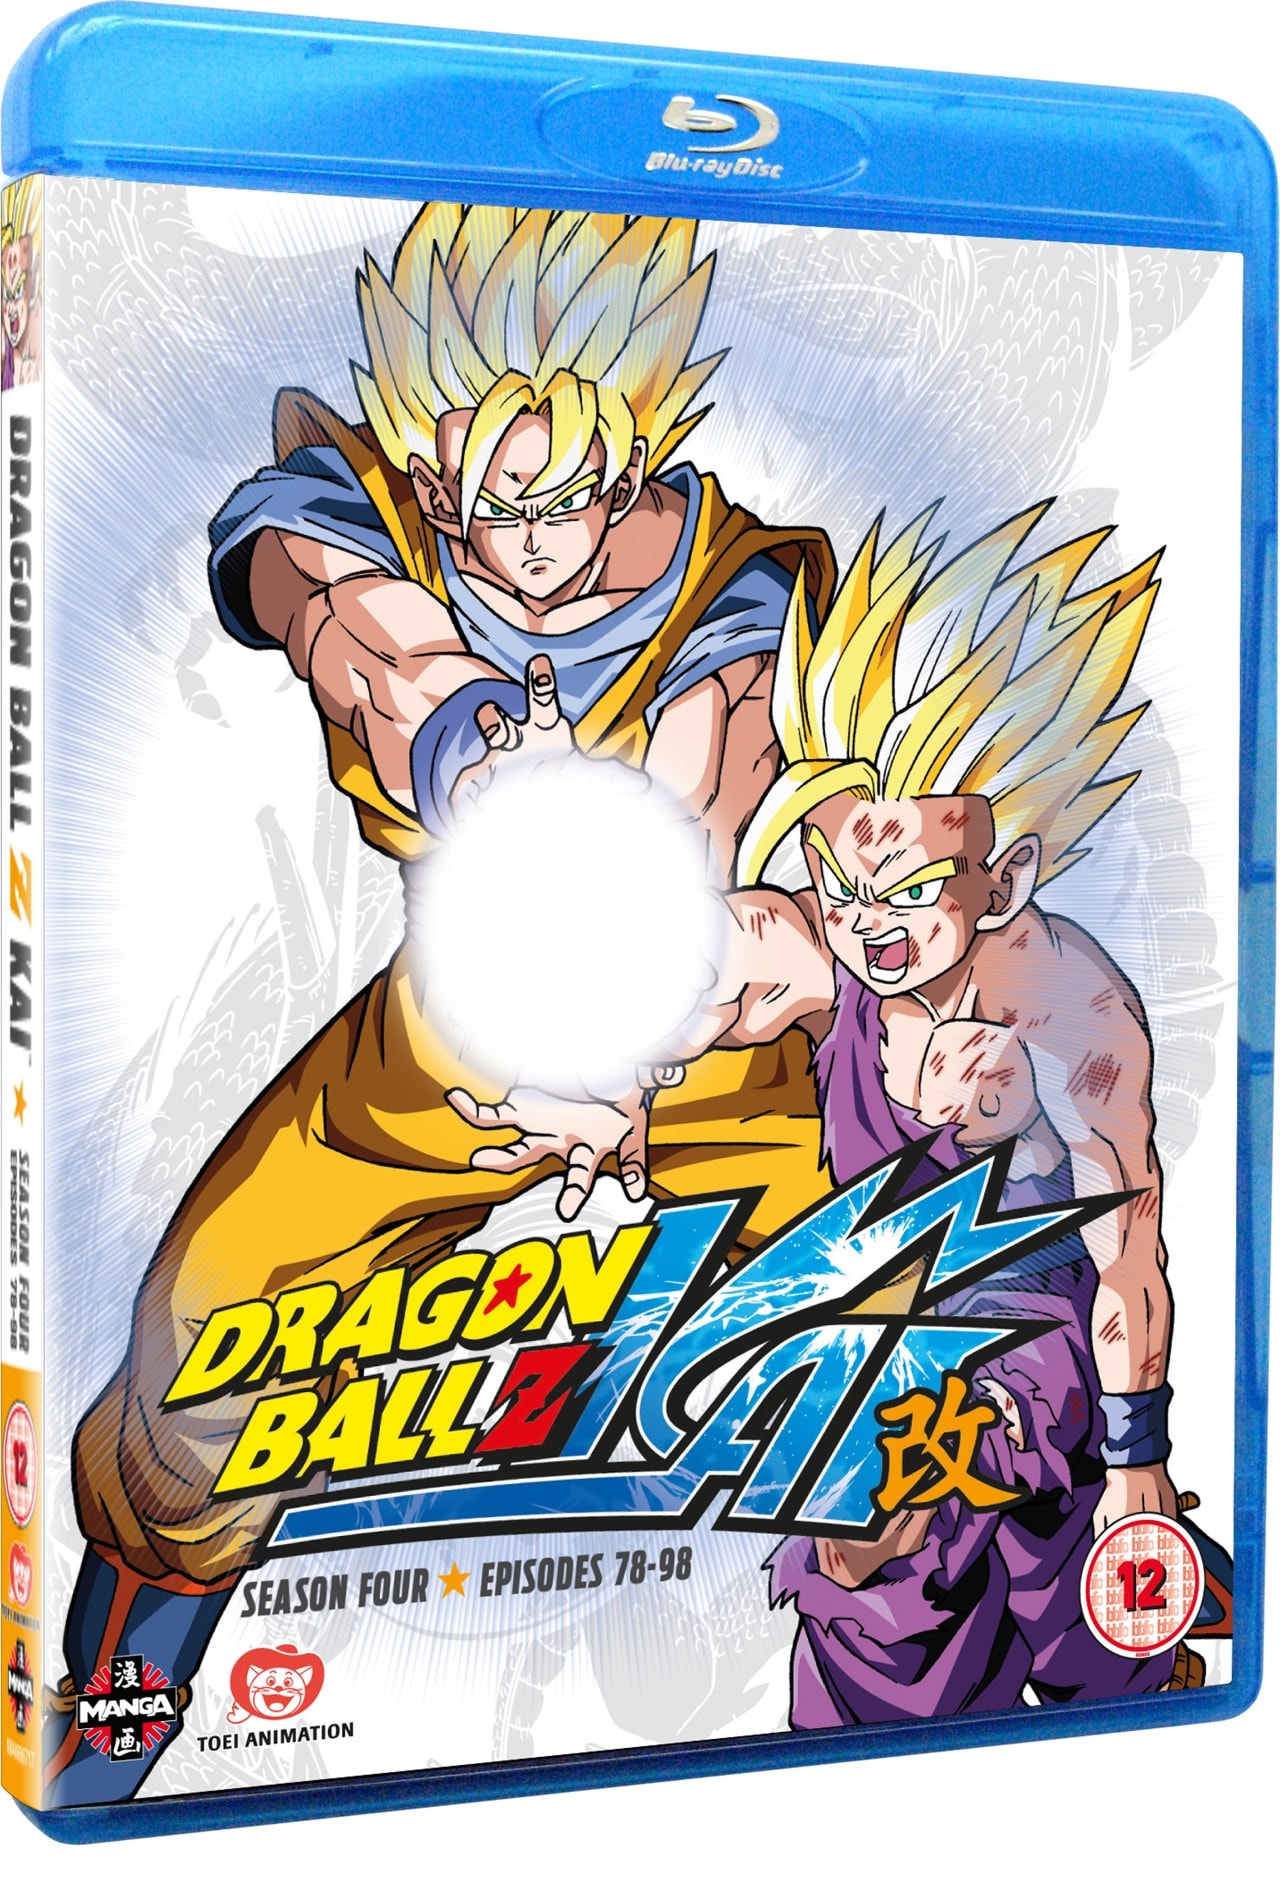 Dragon Ball Z KAI: Season 4 | Blu-ray | Free shipping over ...